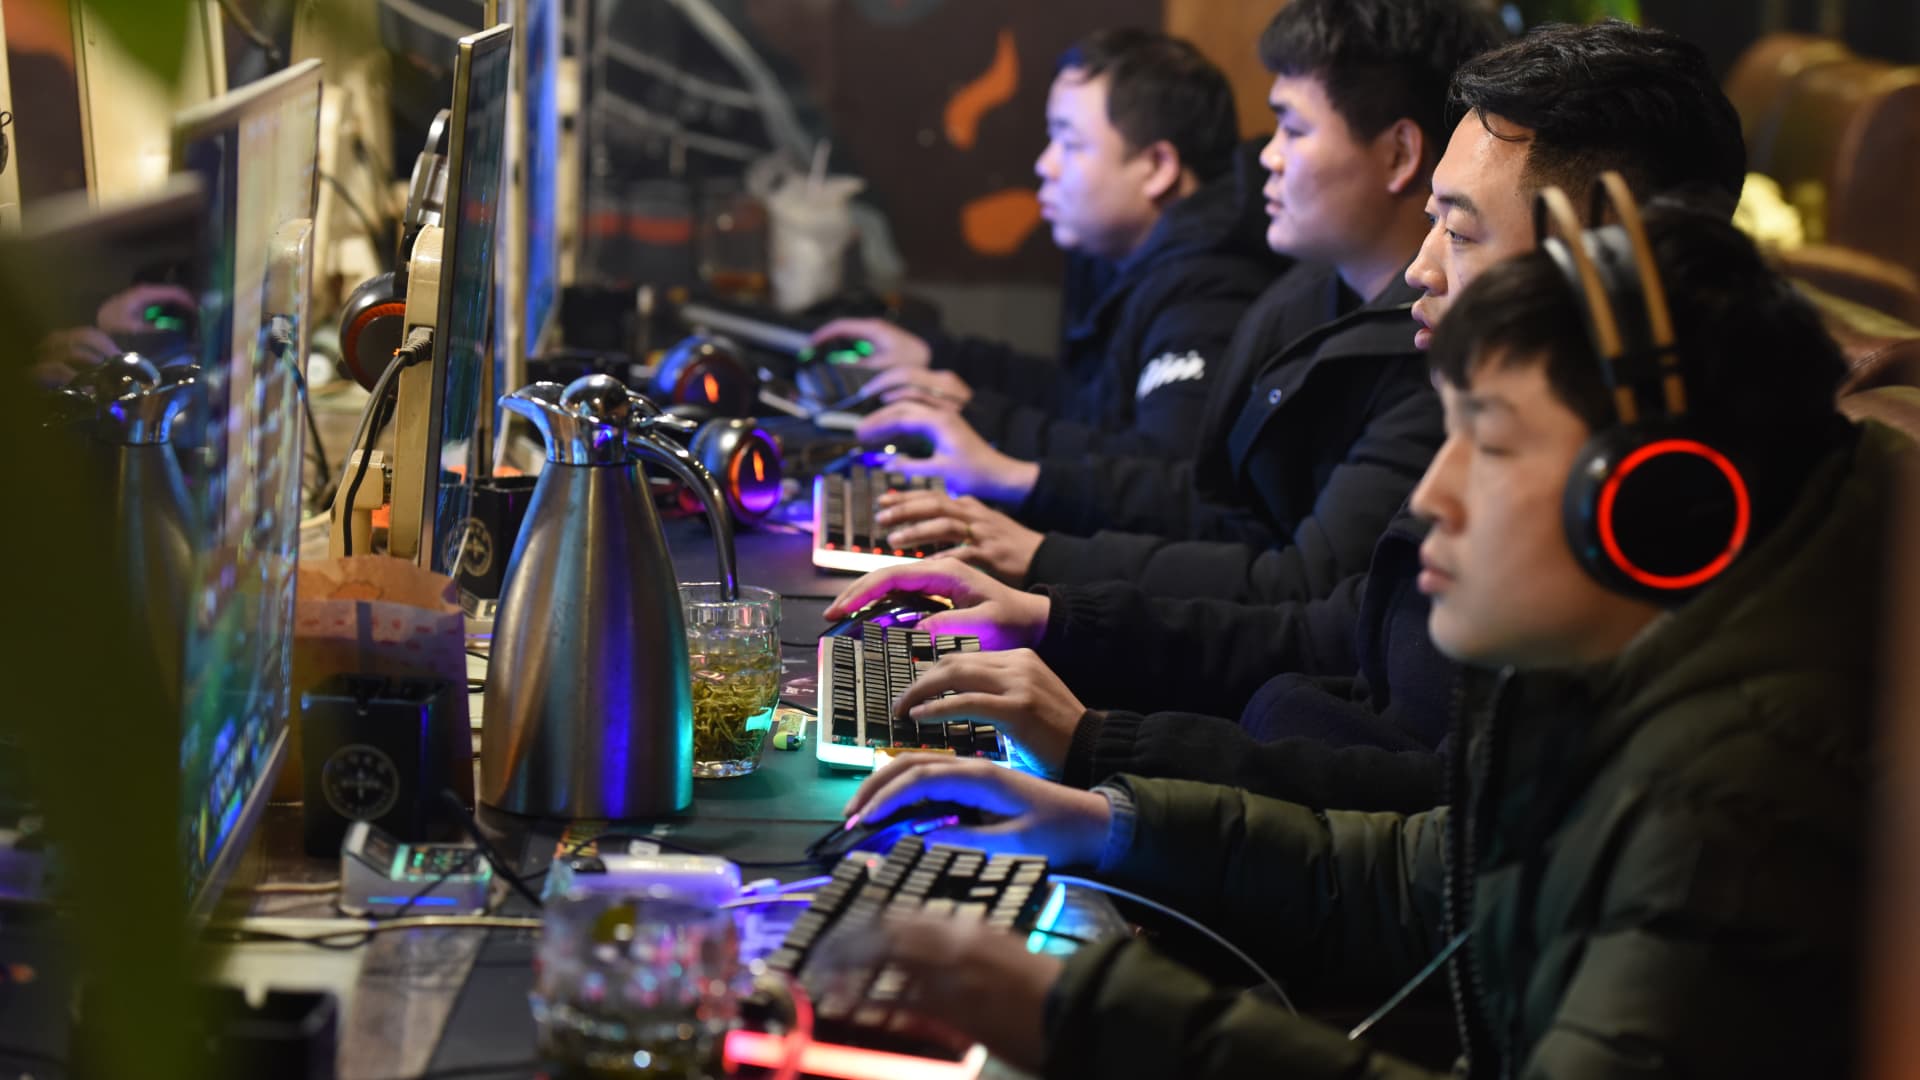 China is world's largest e-sports market despite crackdown: Study